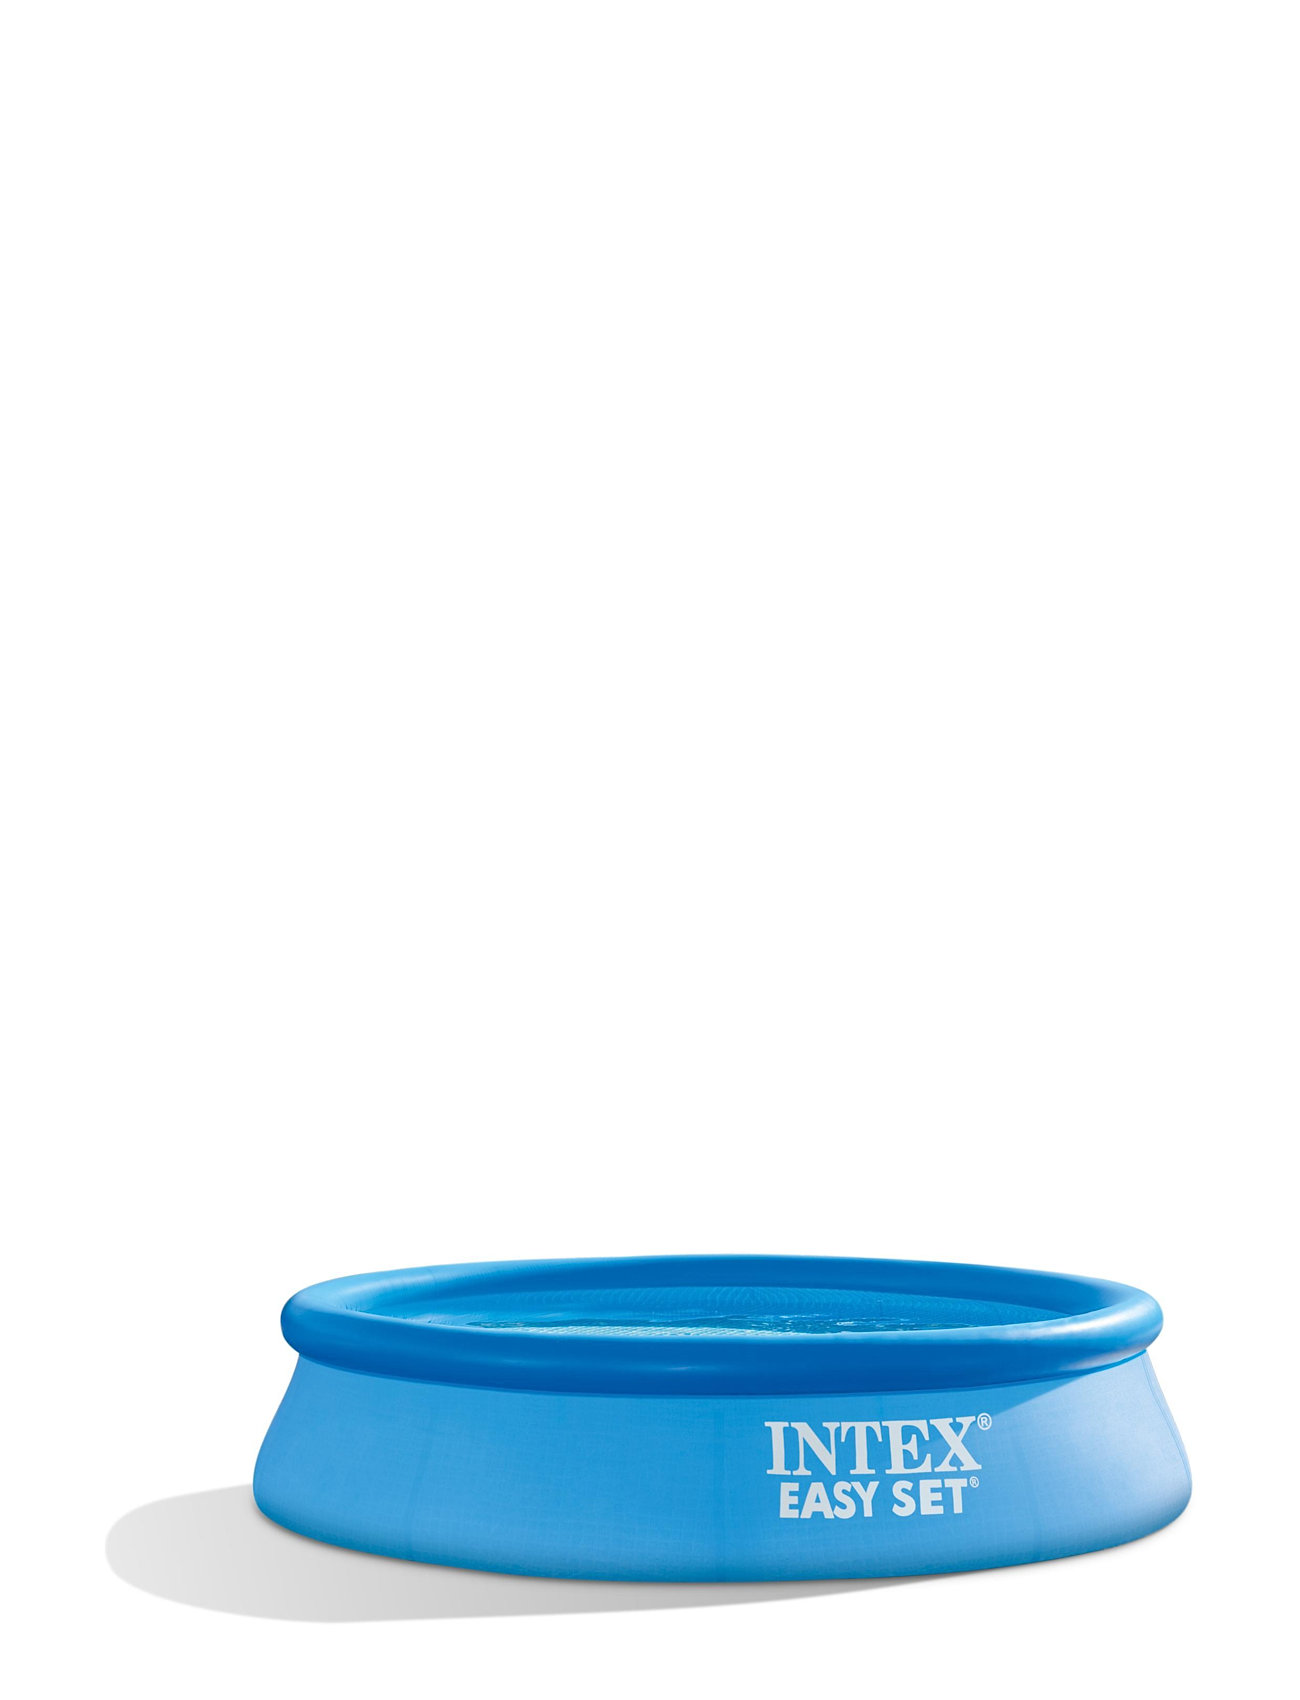 Intex Easy Set Pool Toys Bath & Water Toys Water Toys Children's Pools Blue INTEX